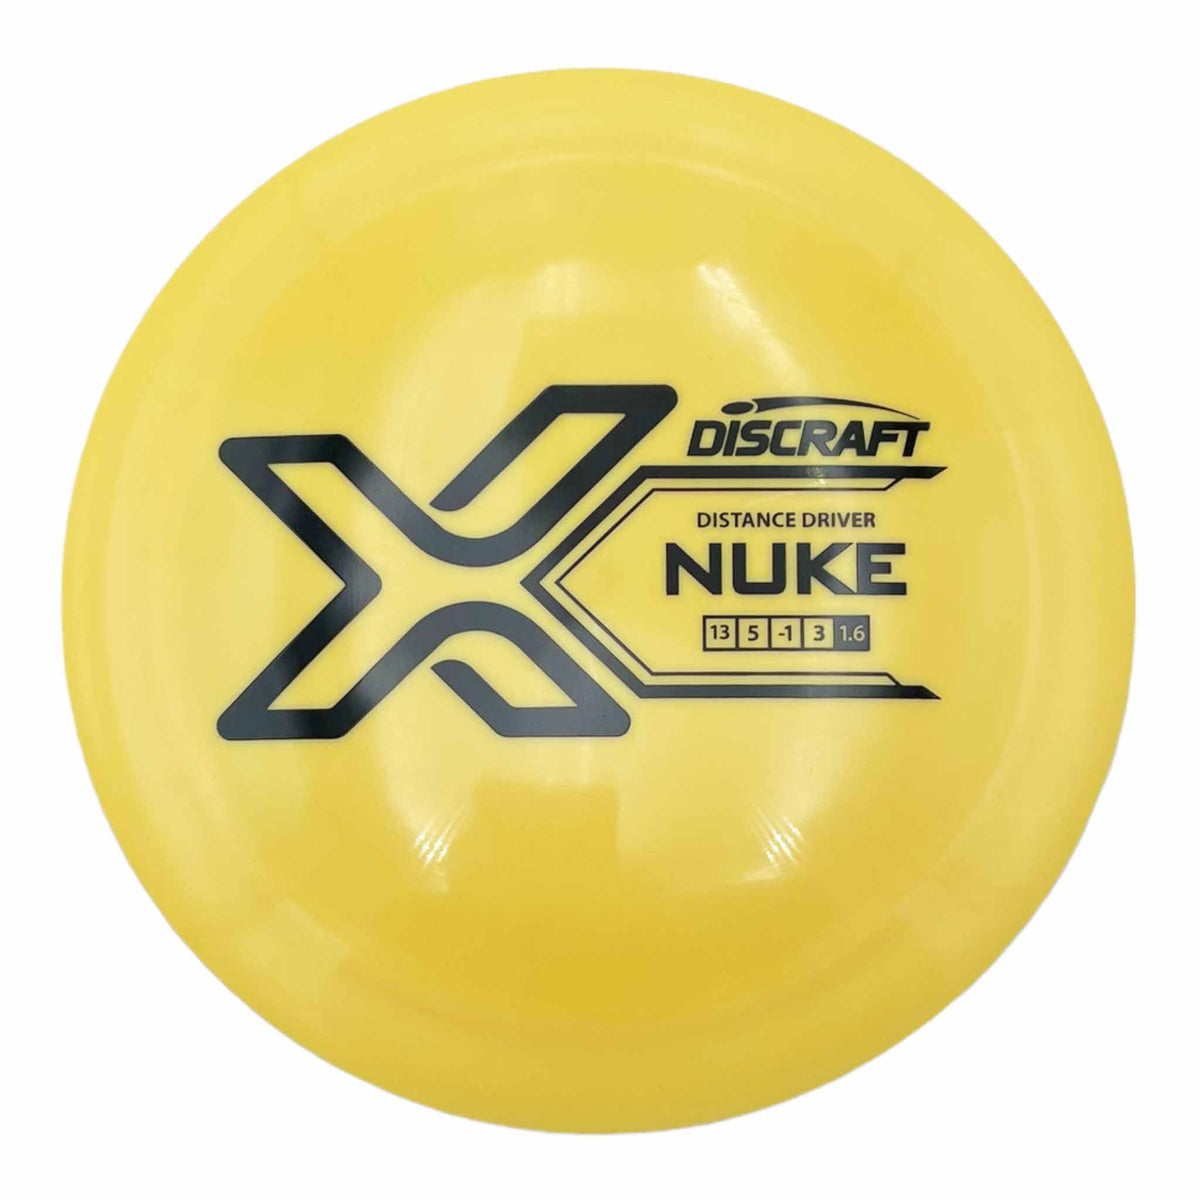 Discraft X Line Nuke distance driver - Yellow